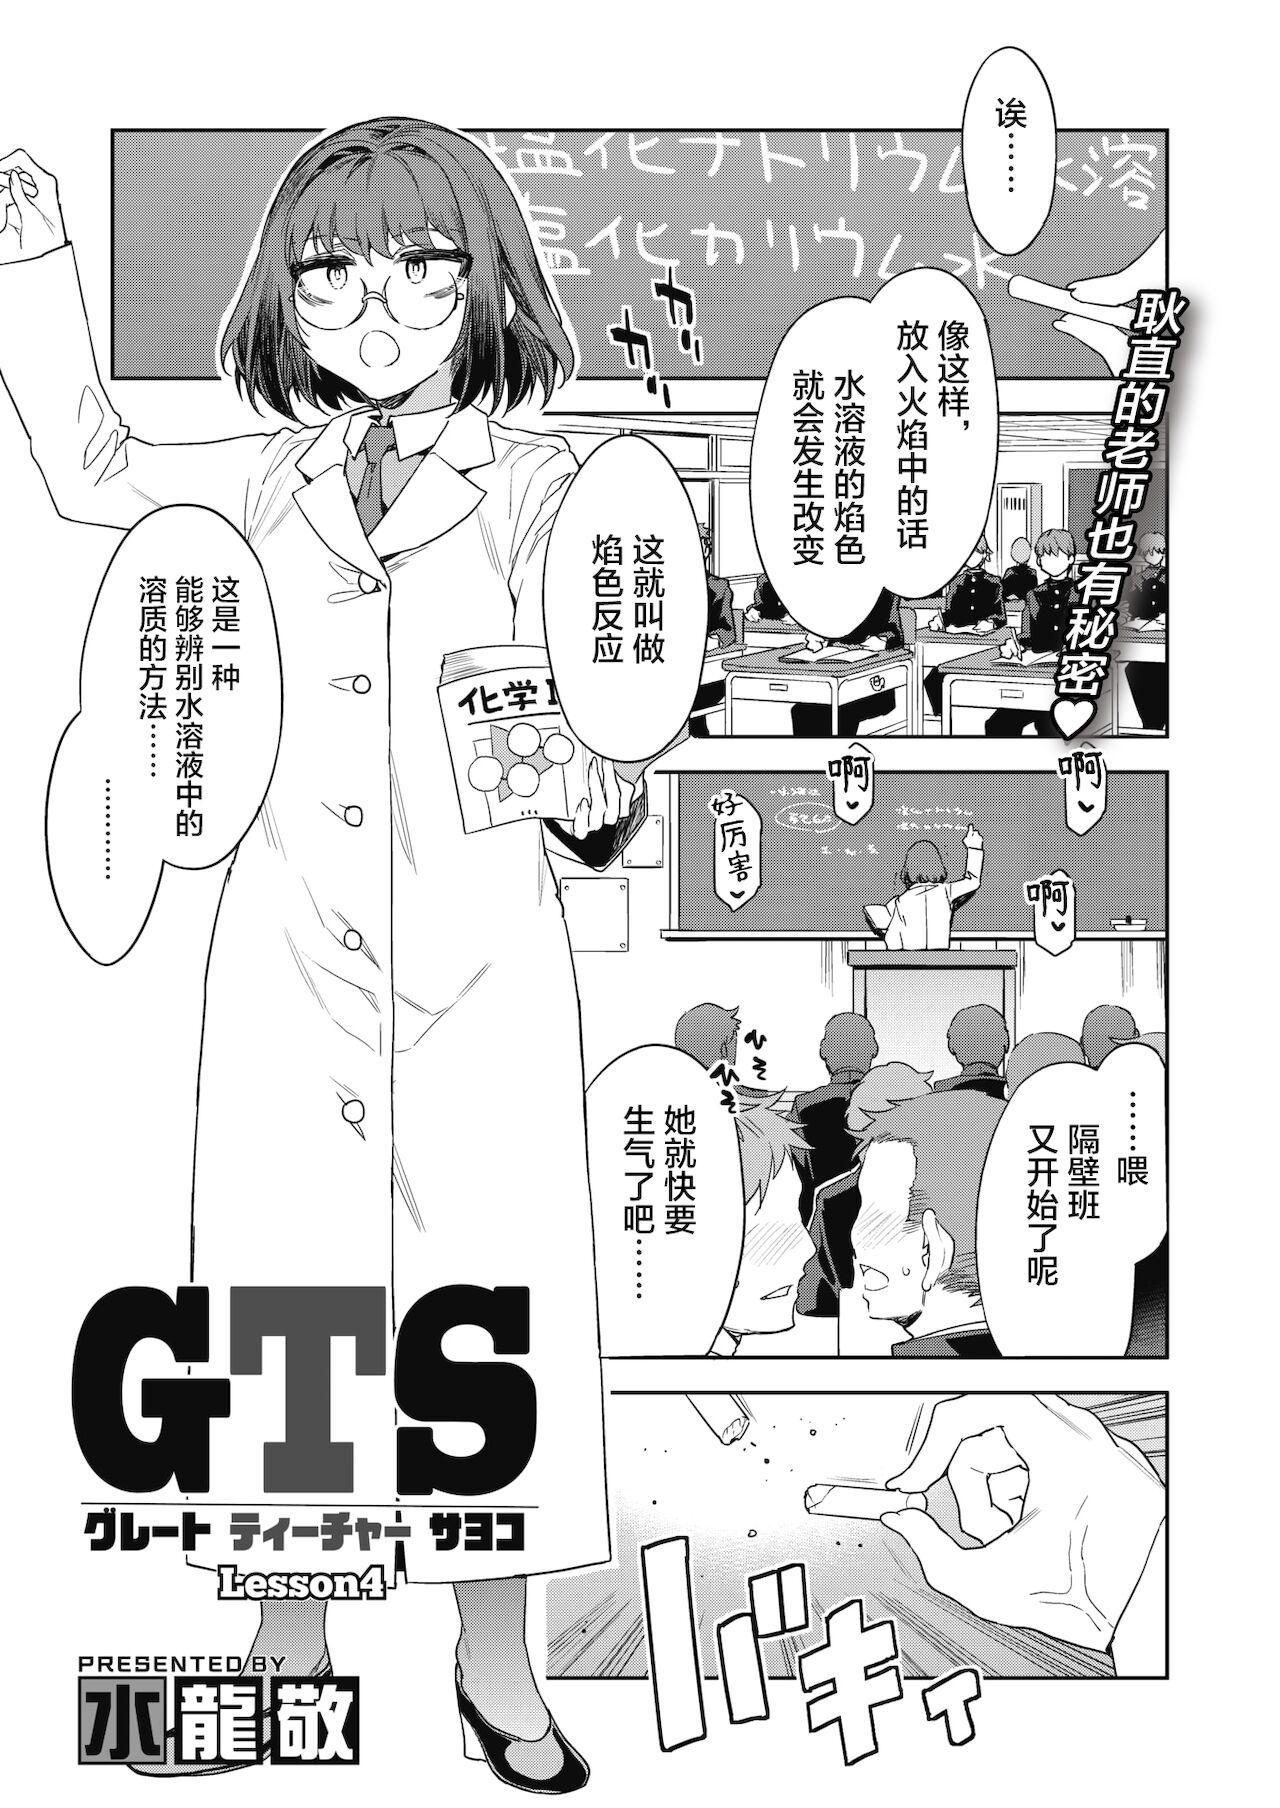 Gag GTS Great Teacher Sayoko Lesson 4 - Original Double Blowjob - Picture 1